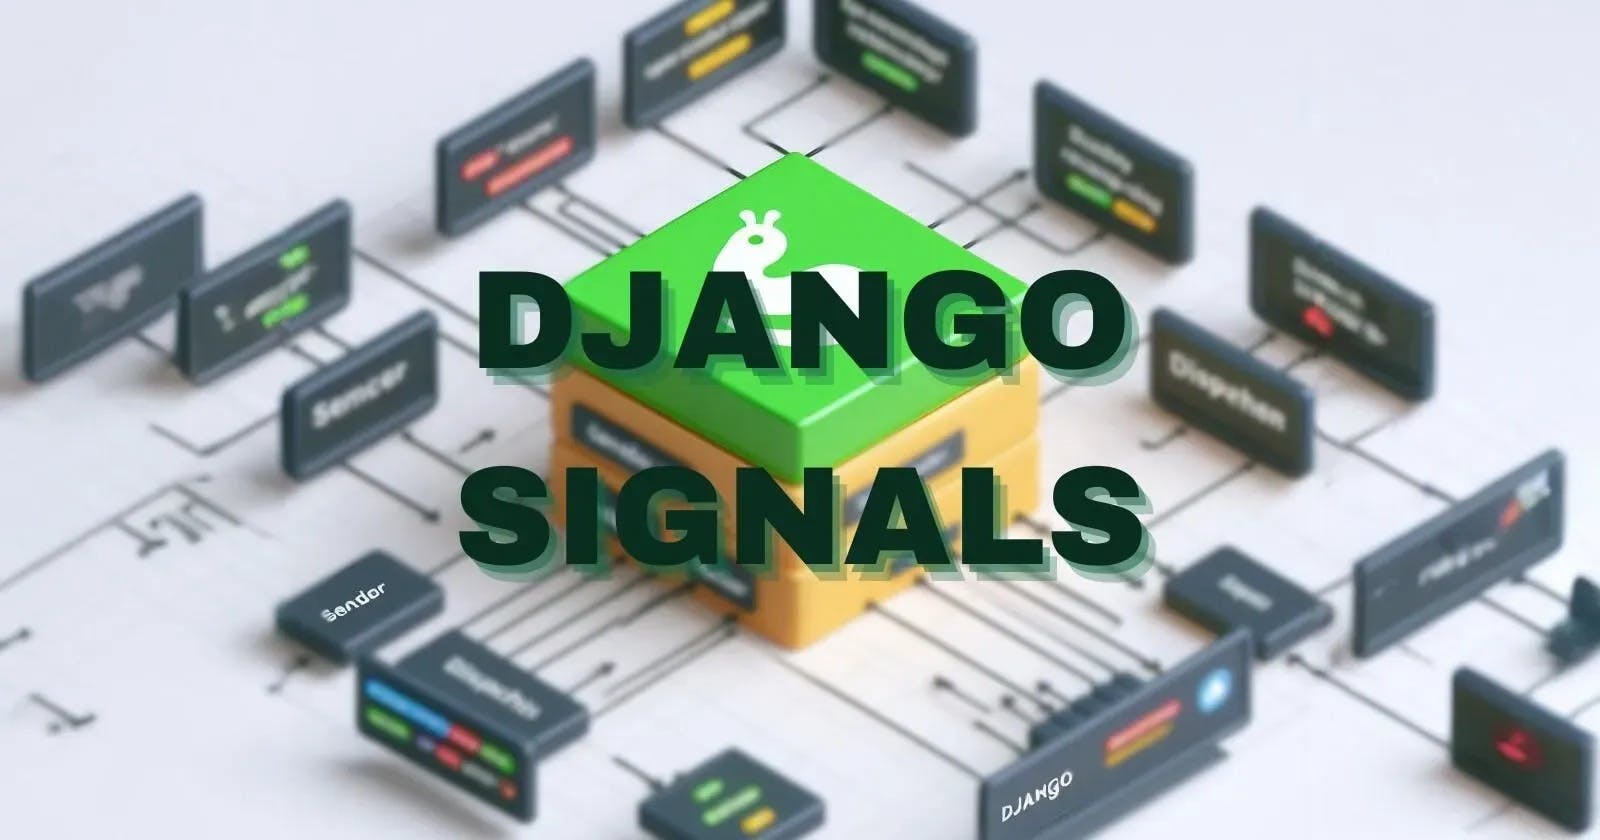 Django Signals: Surface Overview